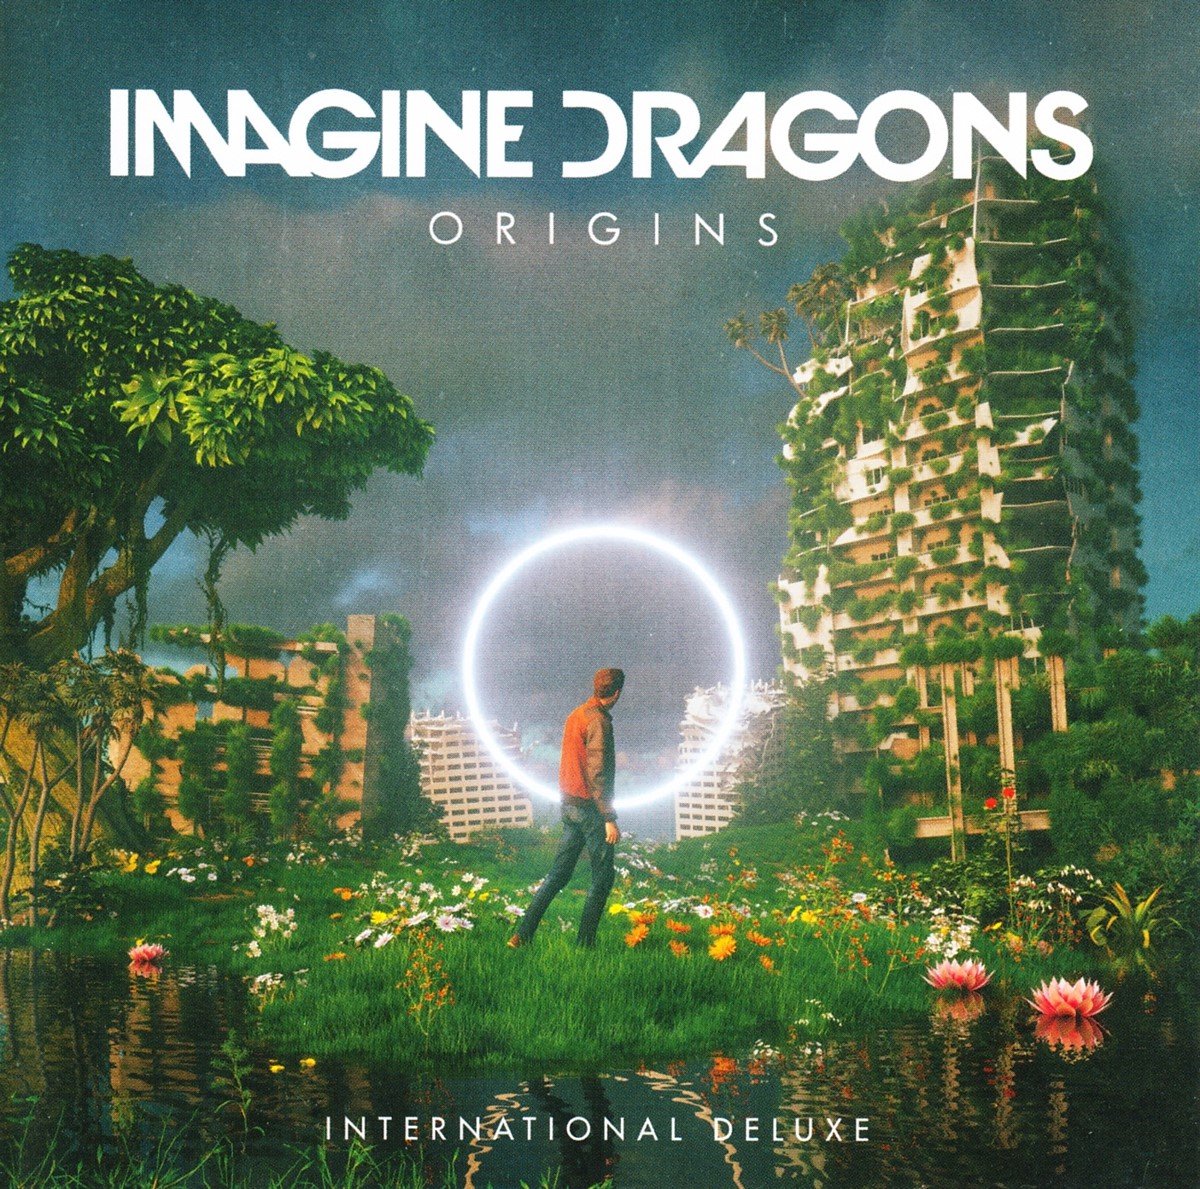 Imagine Dragons - Origins (CD) (Deluxe Edition) - Imagine Dragons